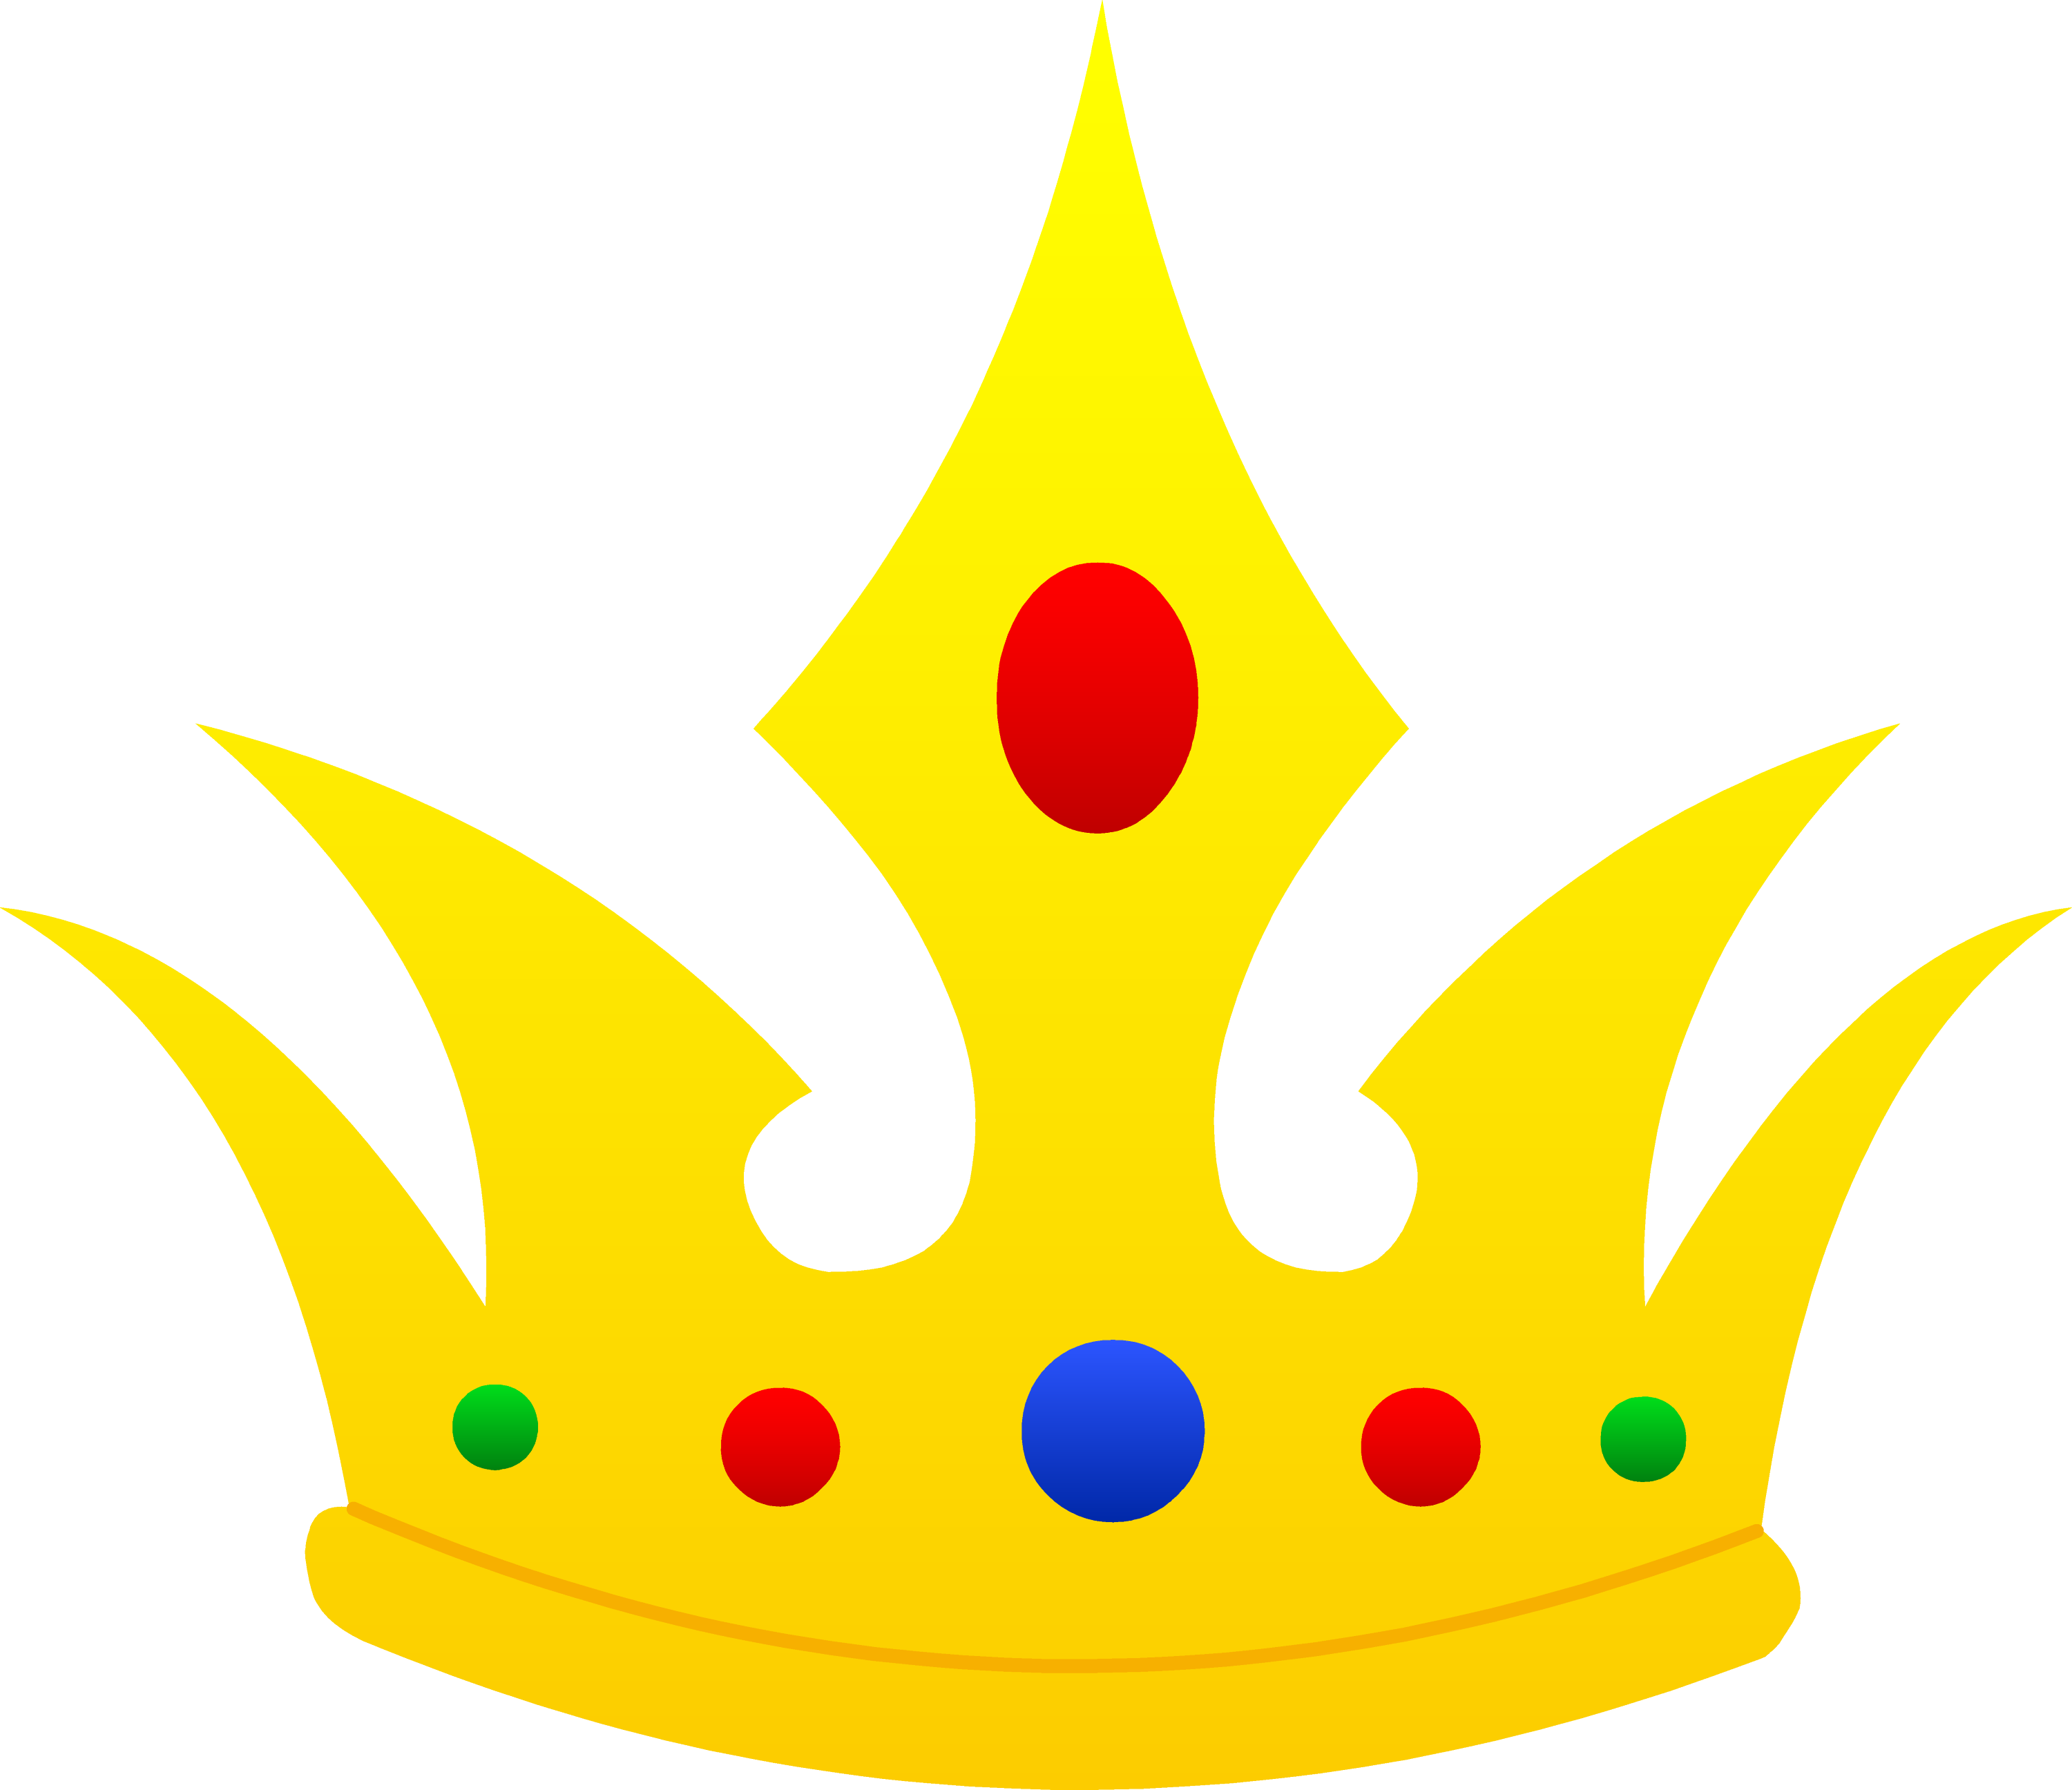 Pointed Golden Crown Design Free Clip Art